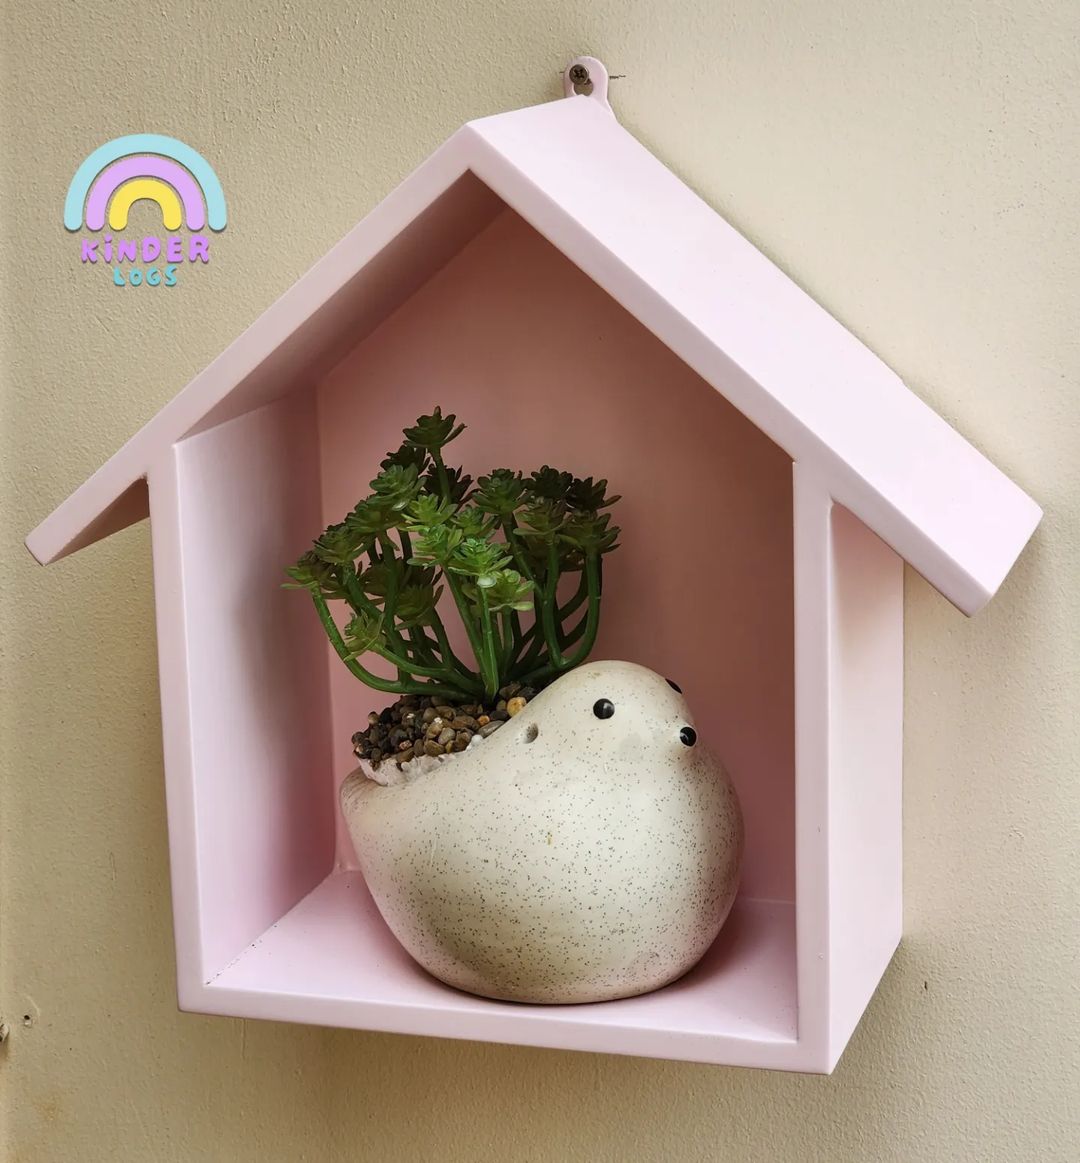 Handmade Hut - Shape Hanging Wall Shelf - Pink 🩷 - Kinder Logs